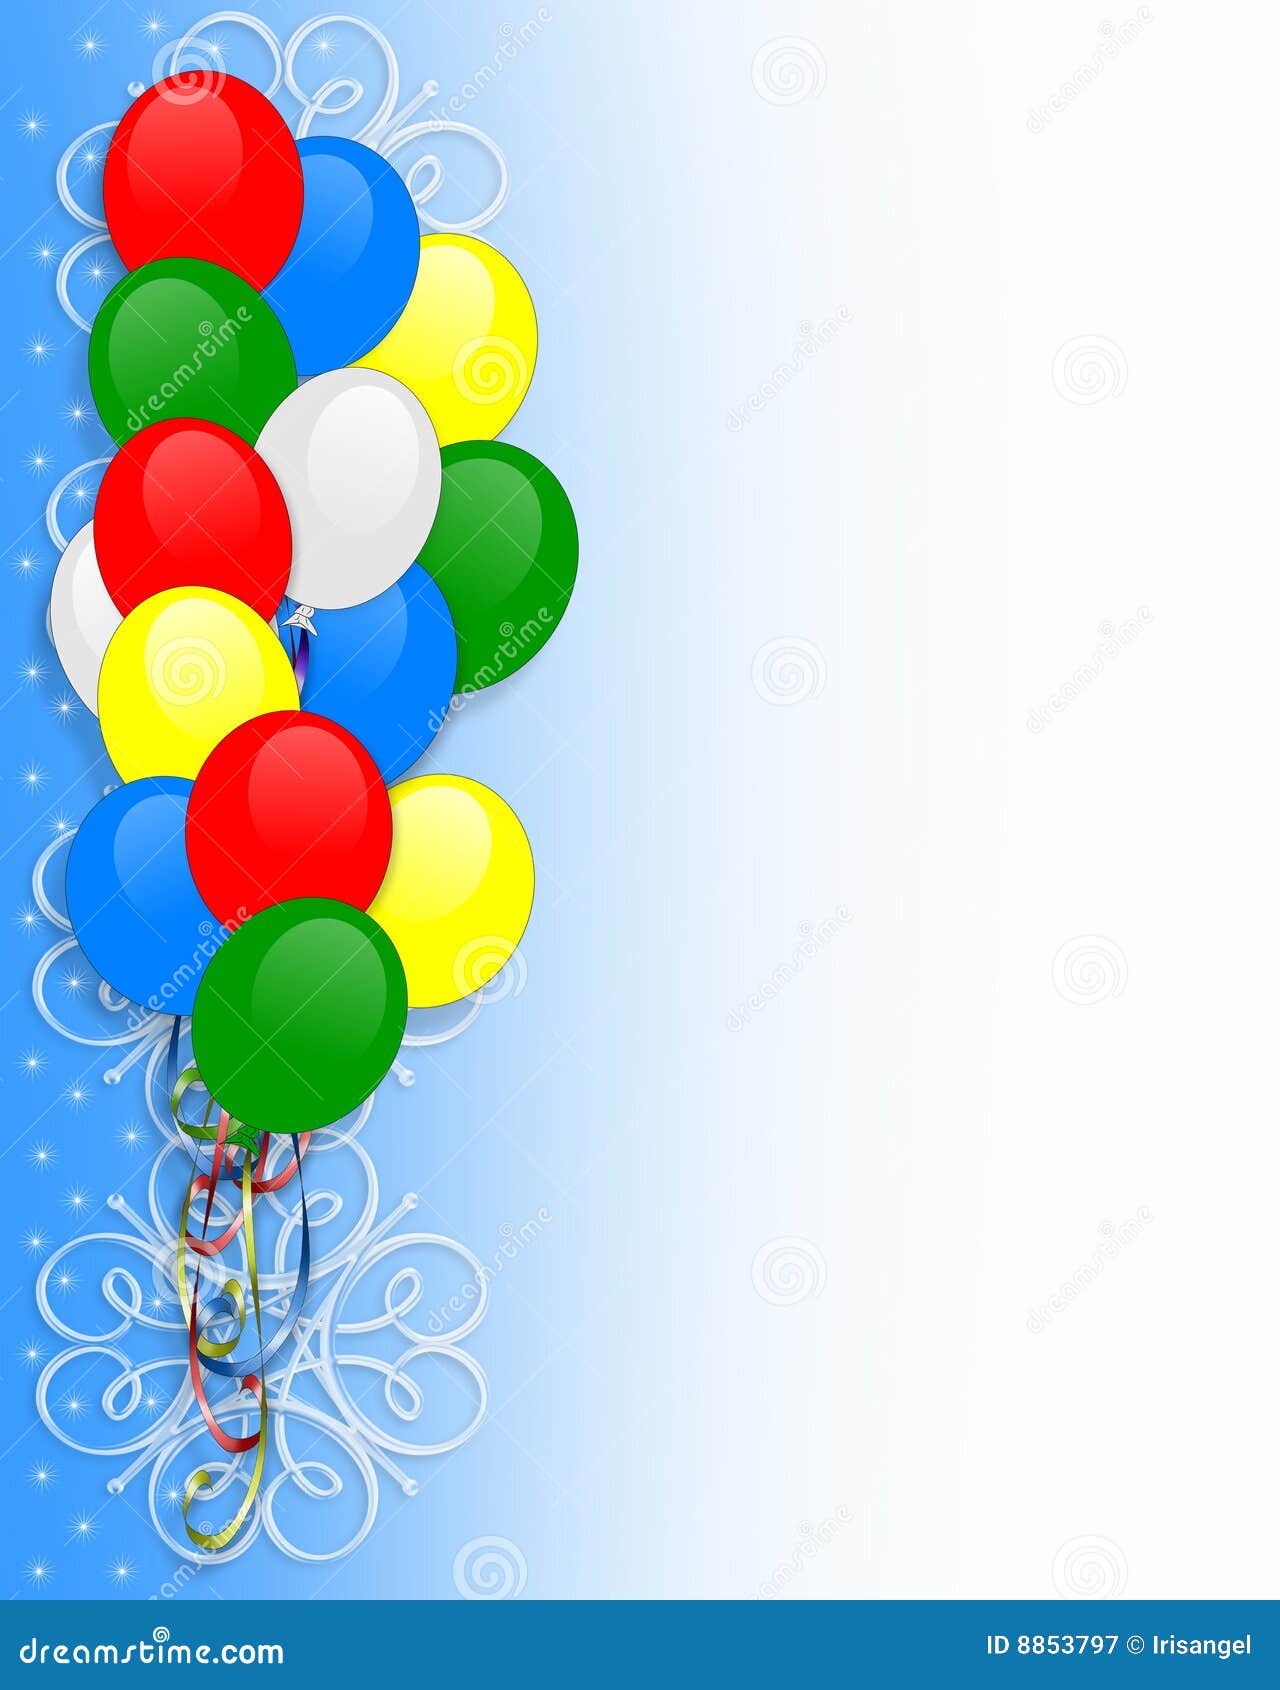 Birthday Invitation Balloons Border Stock Illustration - Image: 8853797